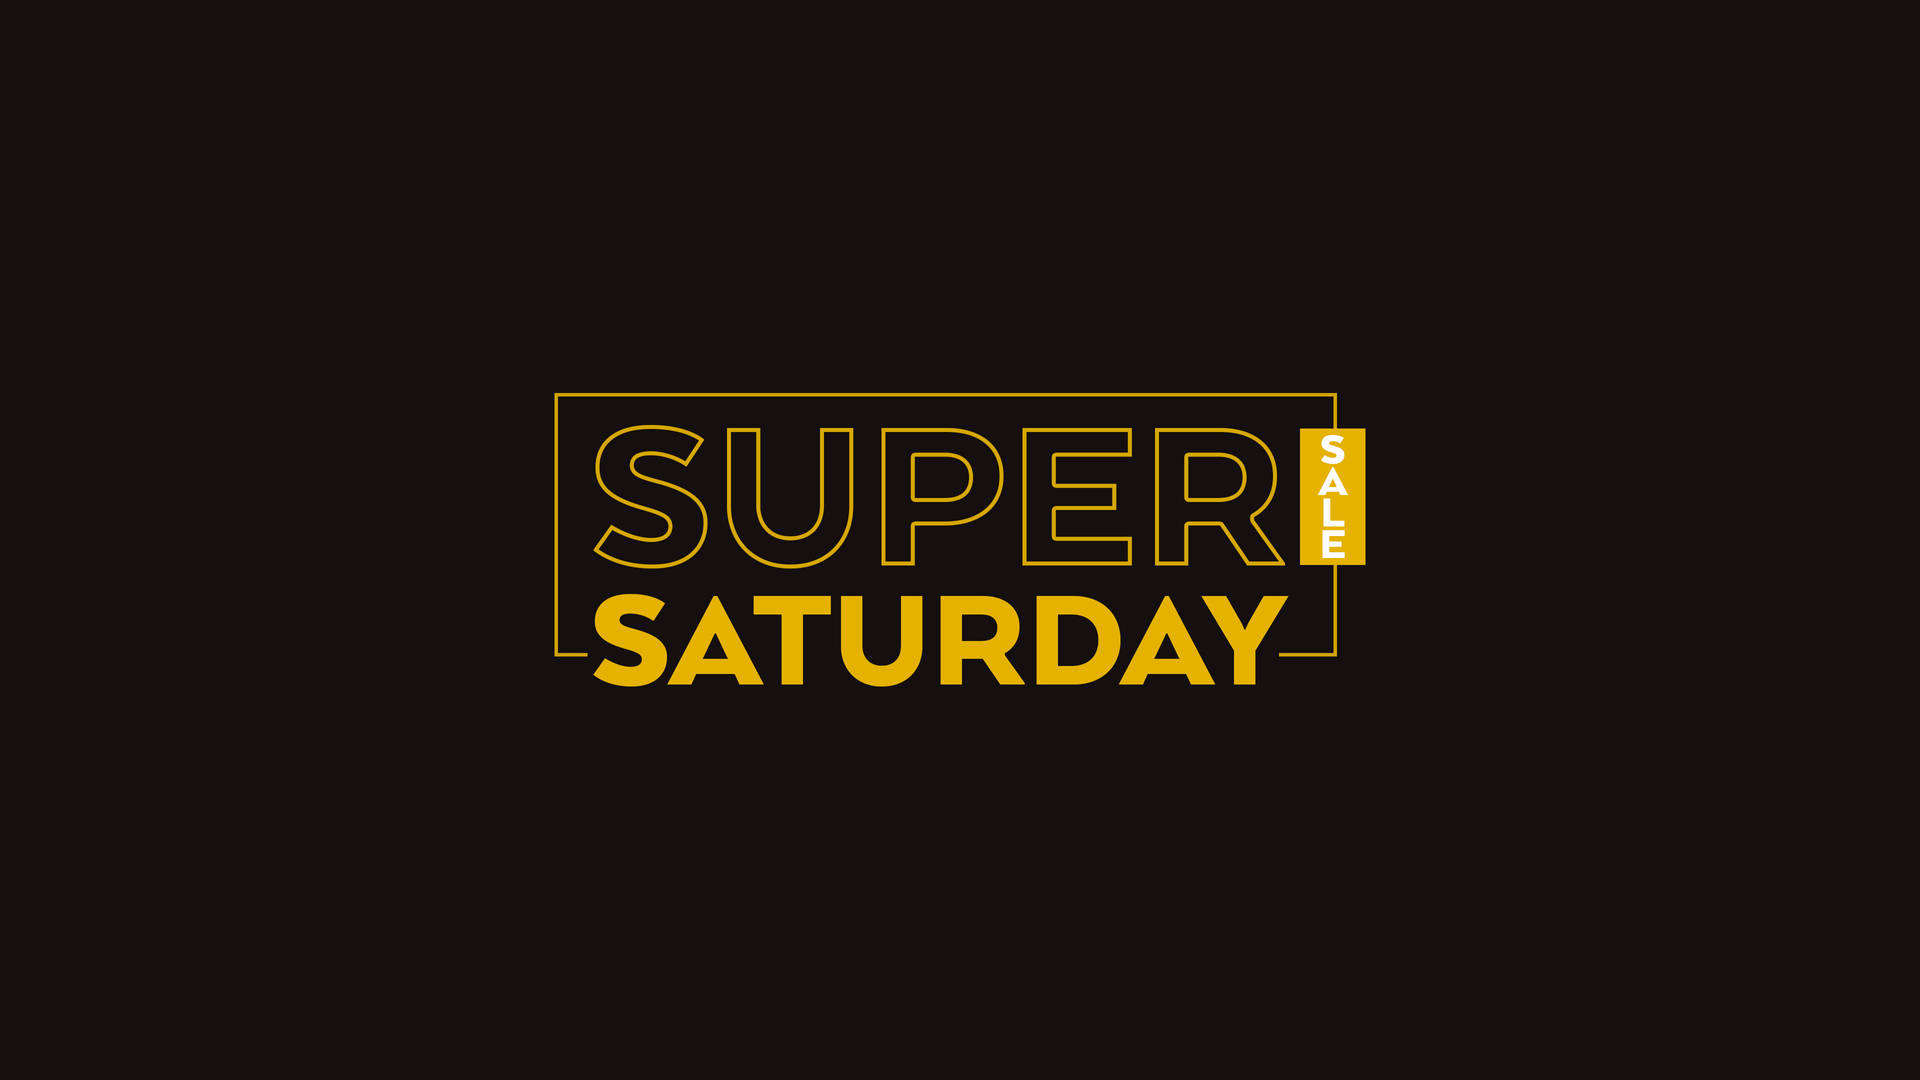 Super Saturday Sale Yellow Font Wallpaper